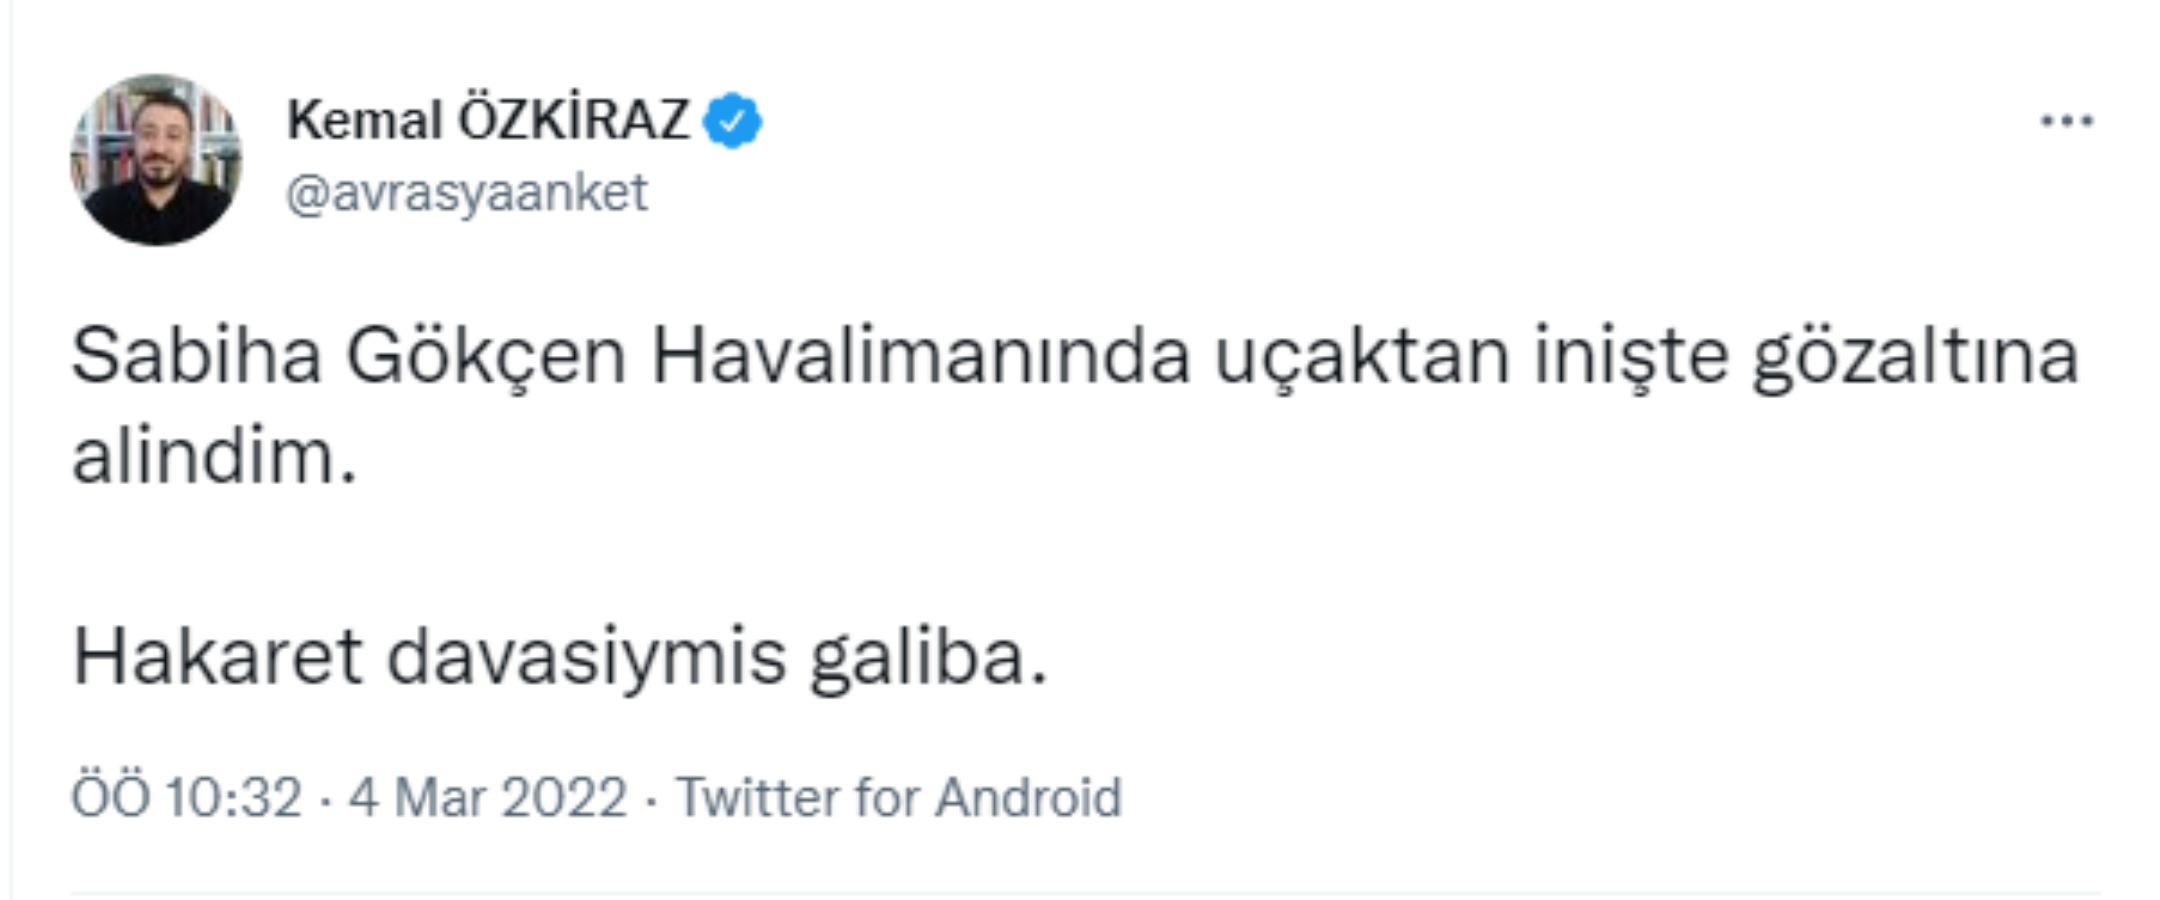 Son dakika: Kemal Özkiraz gözaltına alındı